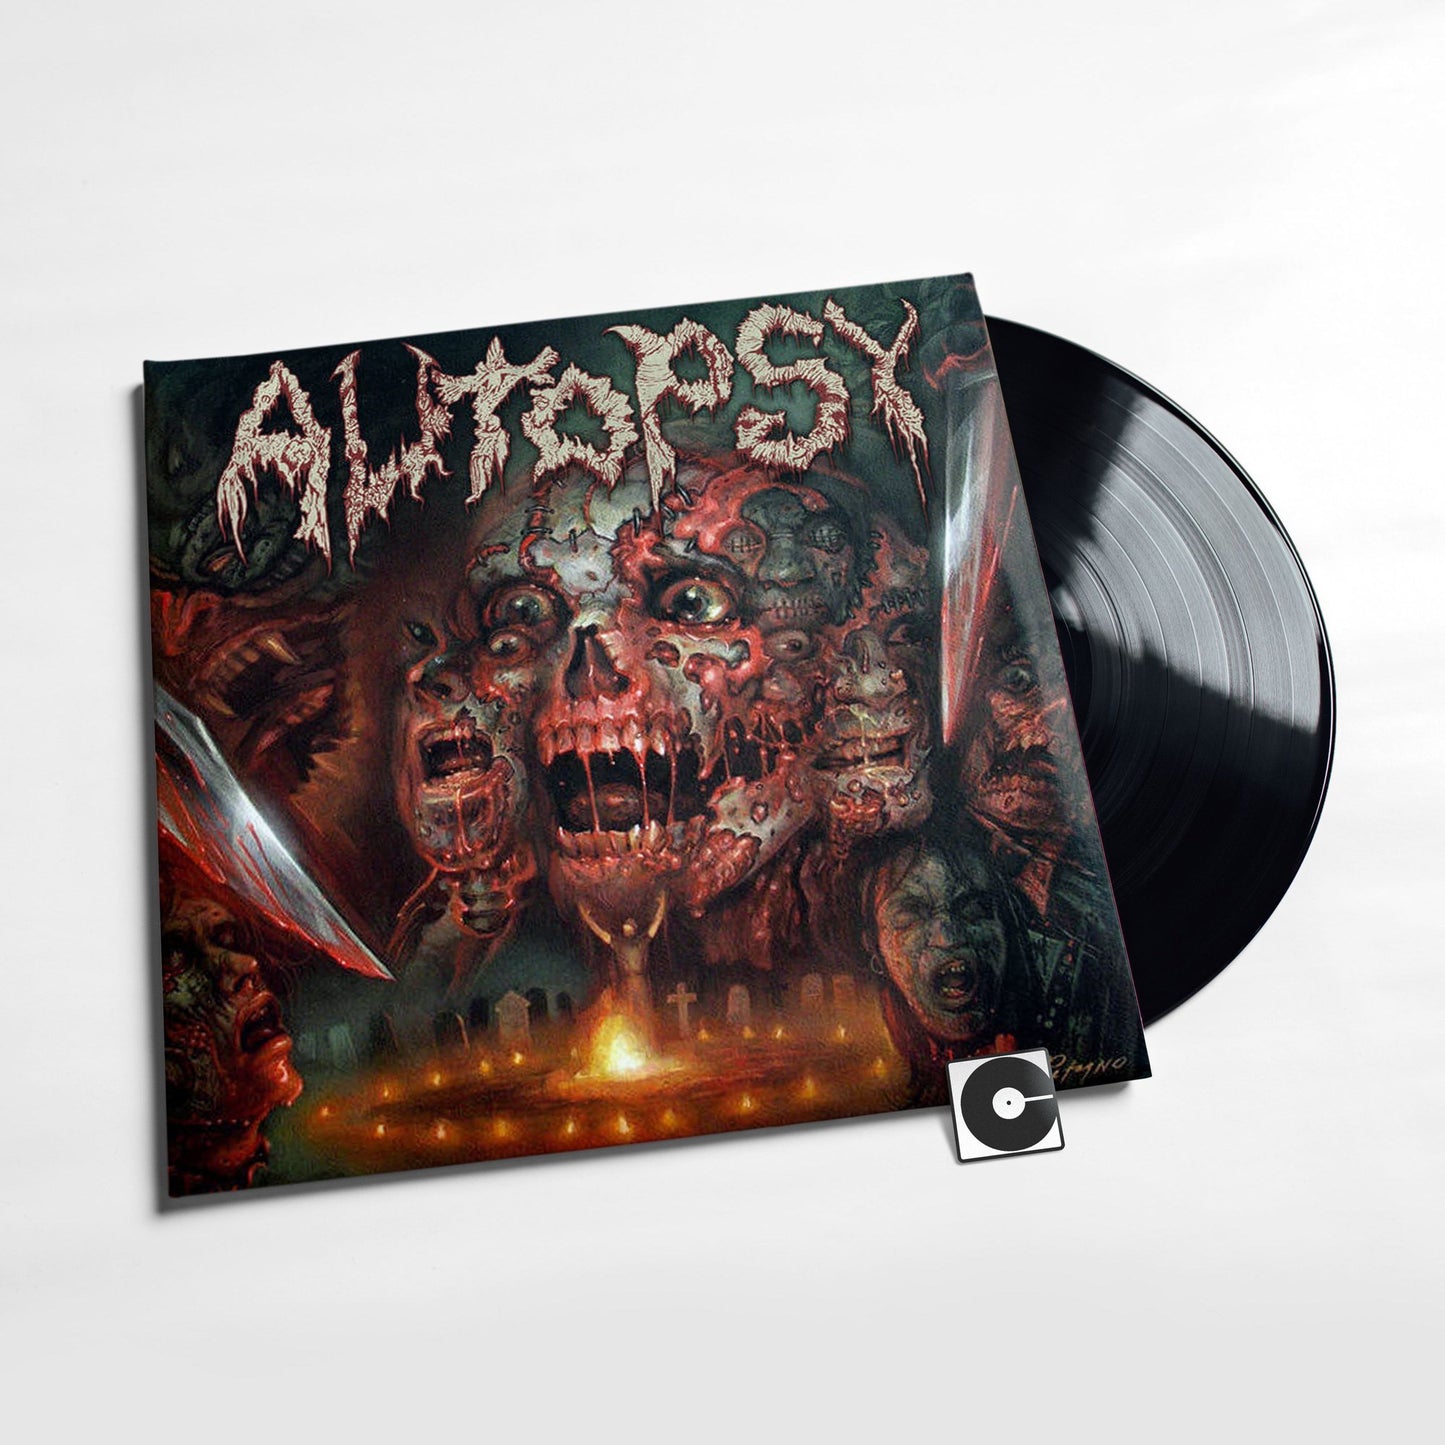 Autopsy - "The Headless Ritual"